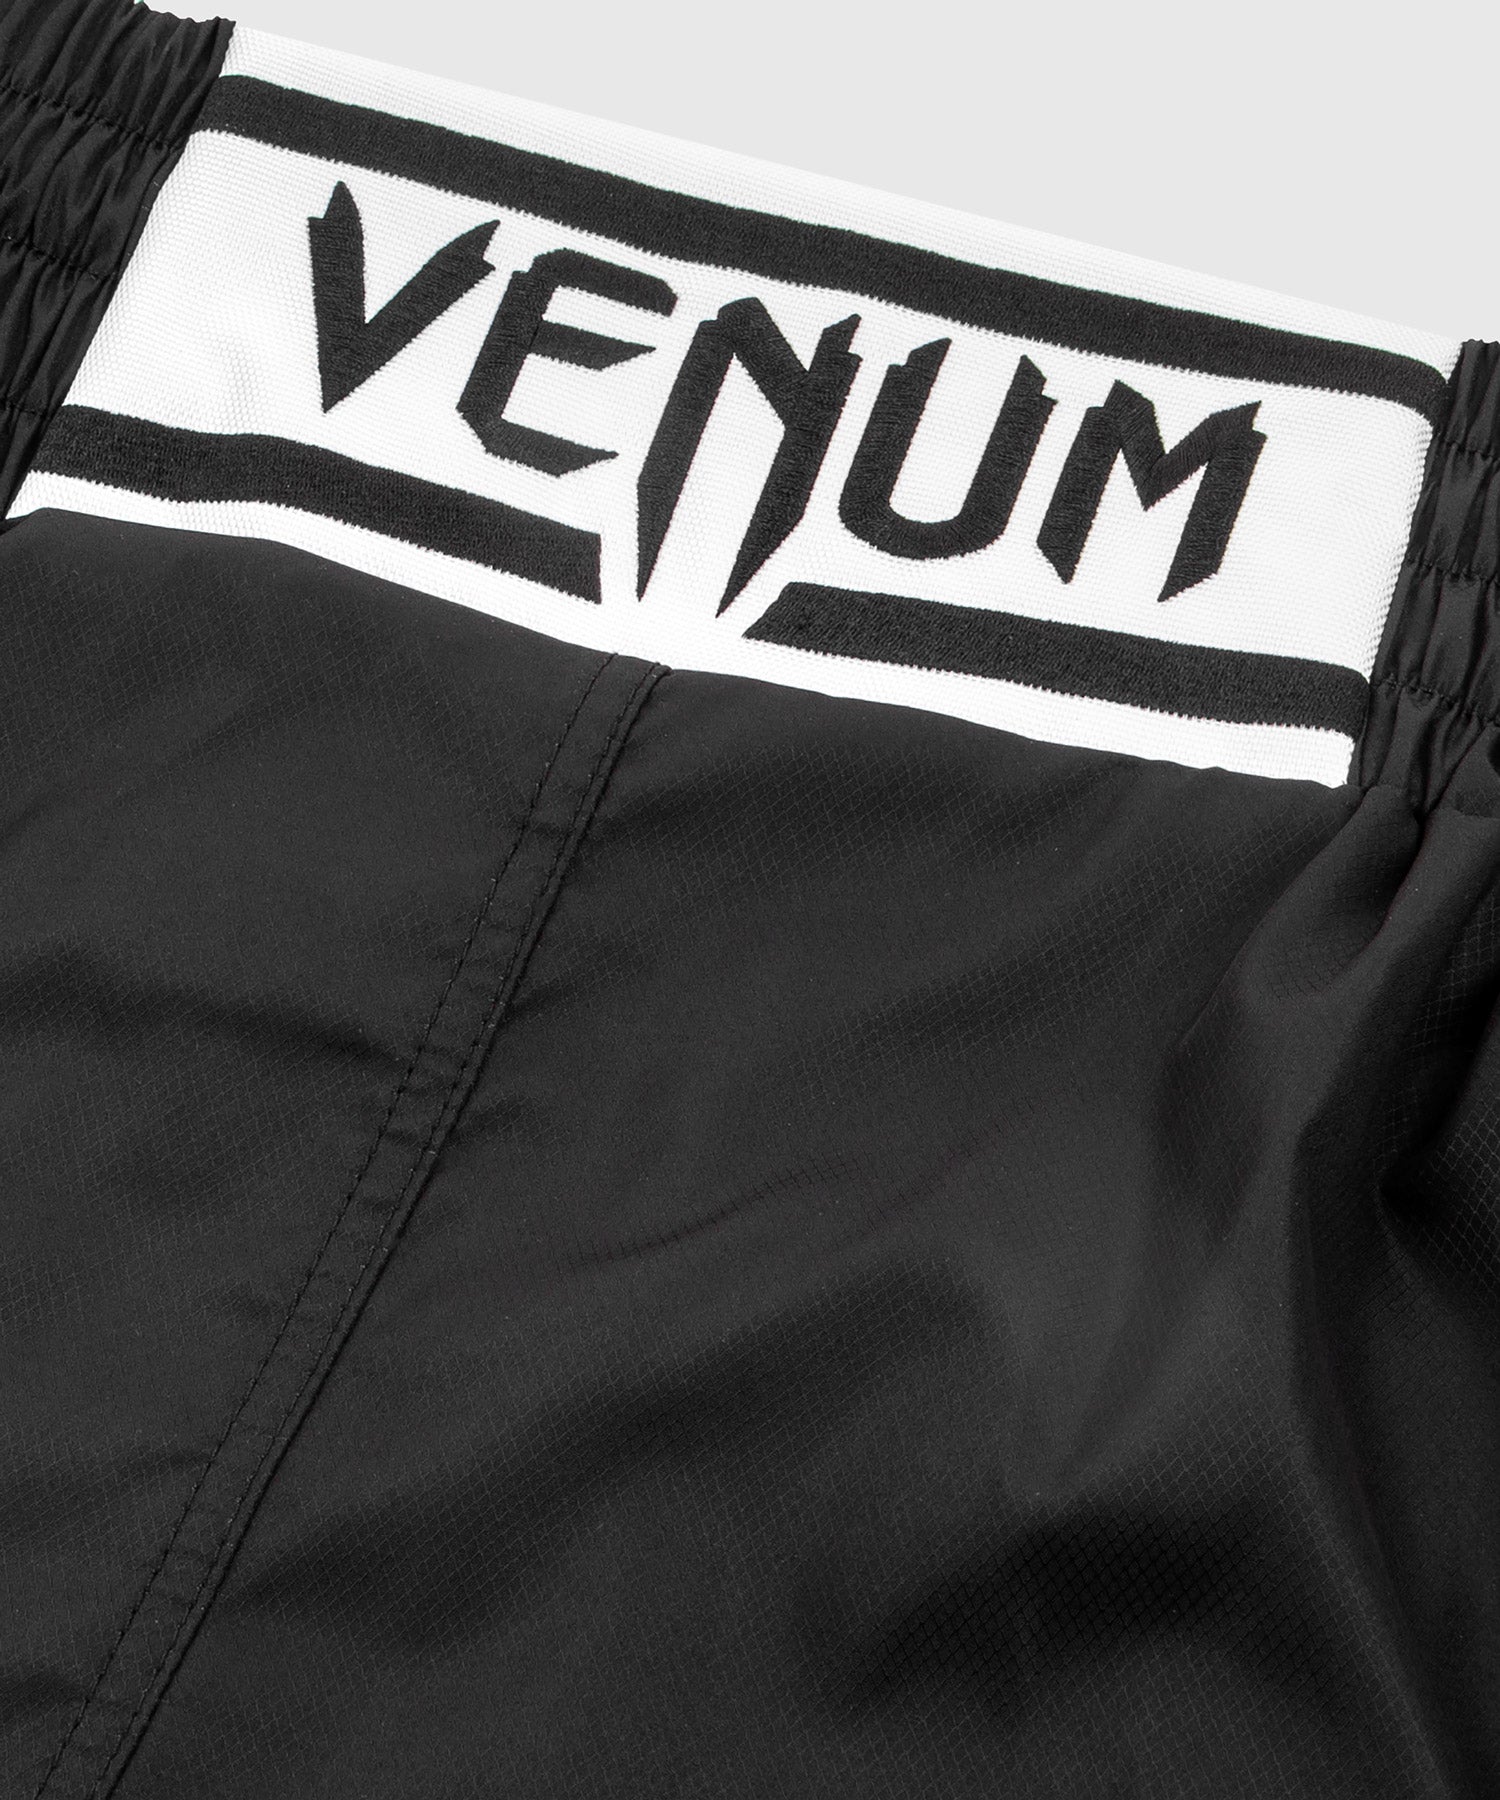 Pantalones de Boxeo Venum Elite - Negro/Blanco